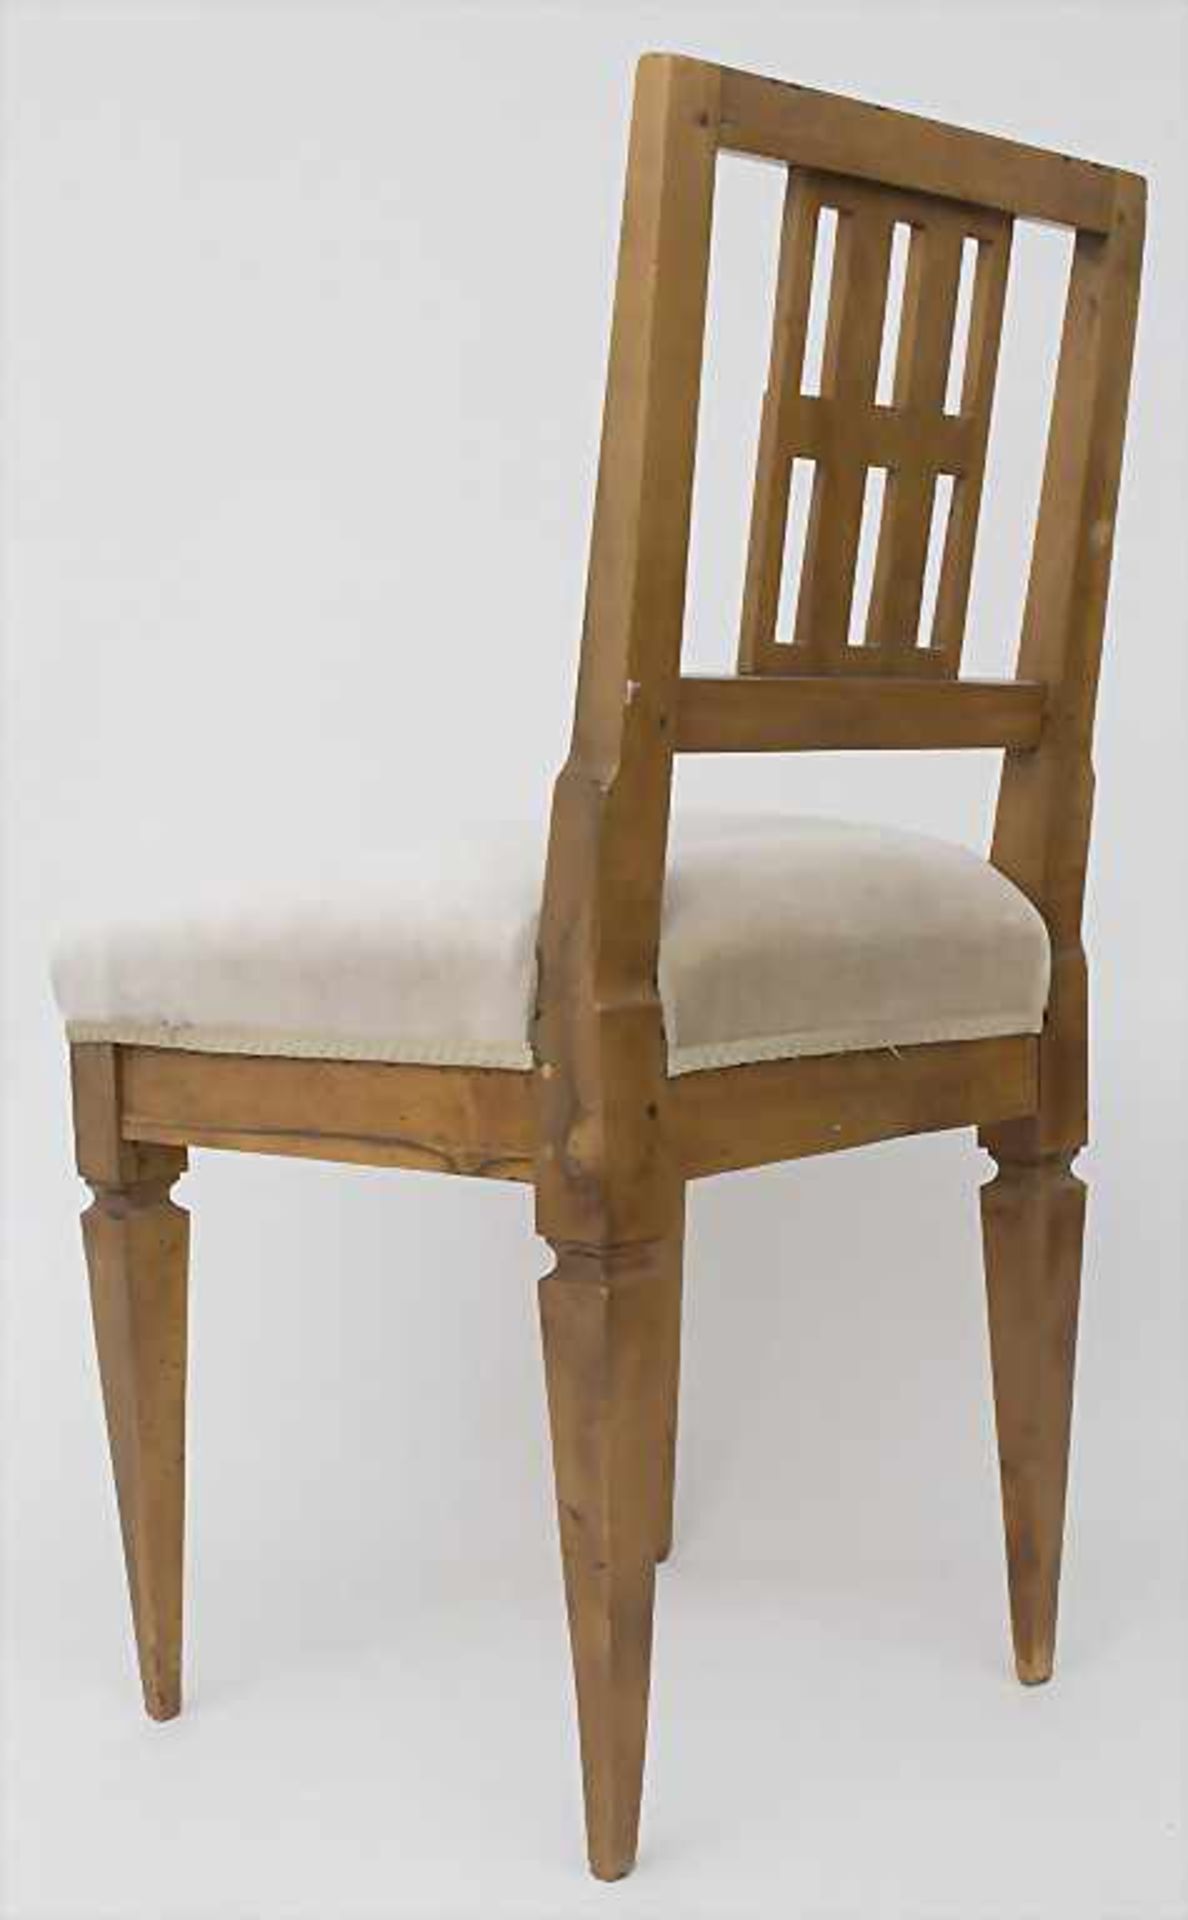 Klassizismus Stuhl / A classicism chair, um 1800Material: Rüsterholz, massiv, gedübelte - Bild 3 aus 5